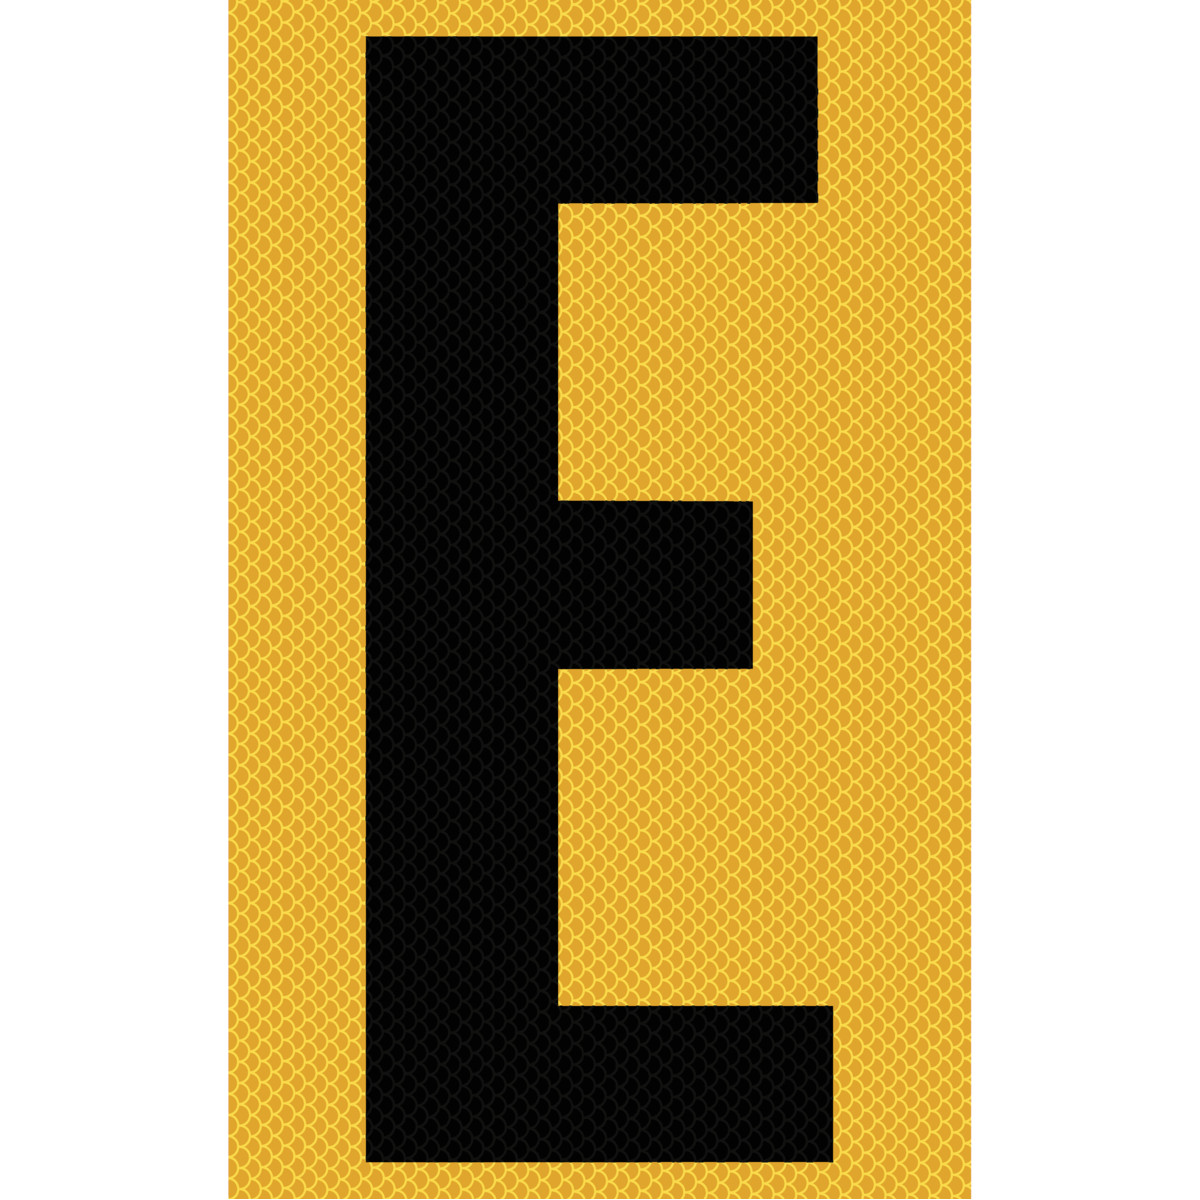 3" Black on Yellow High Intensity Reflective "E"